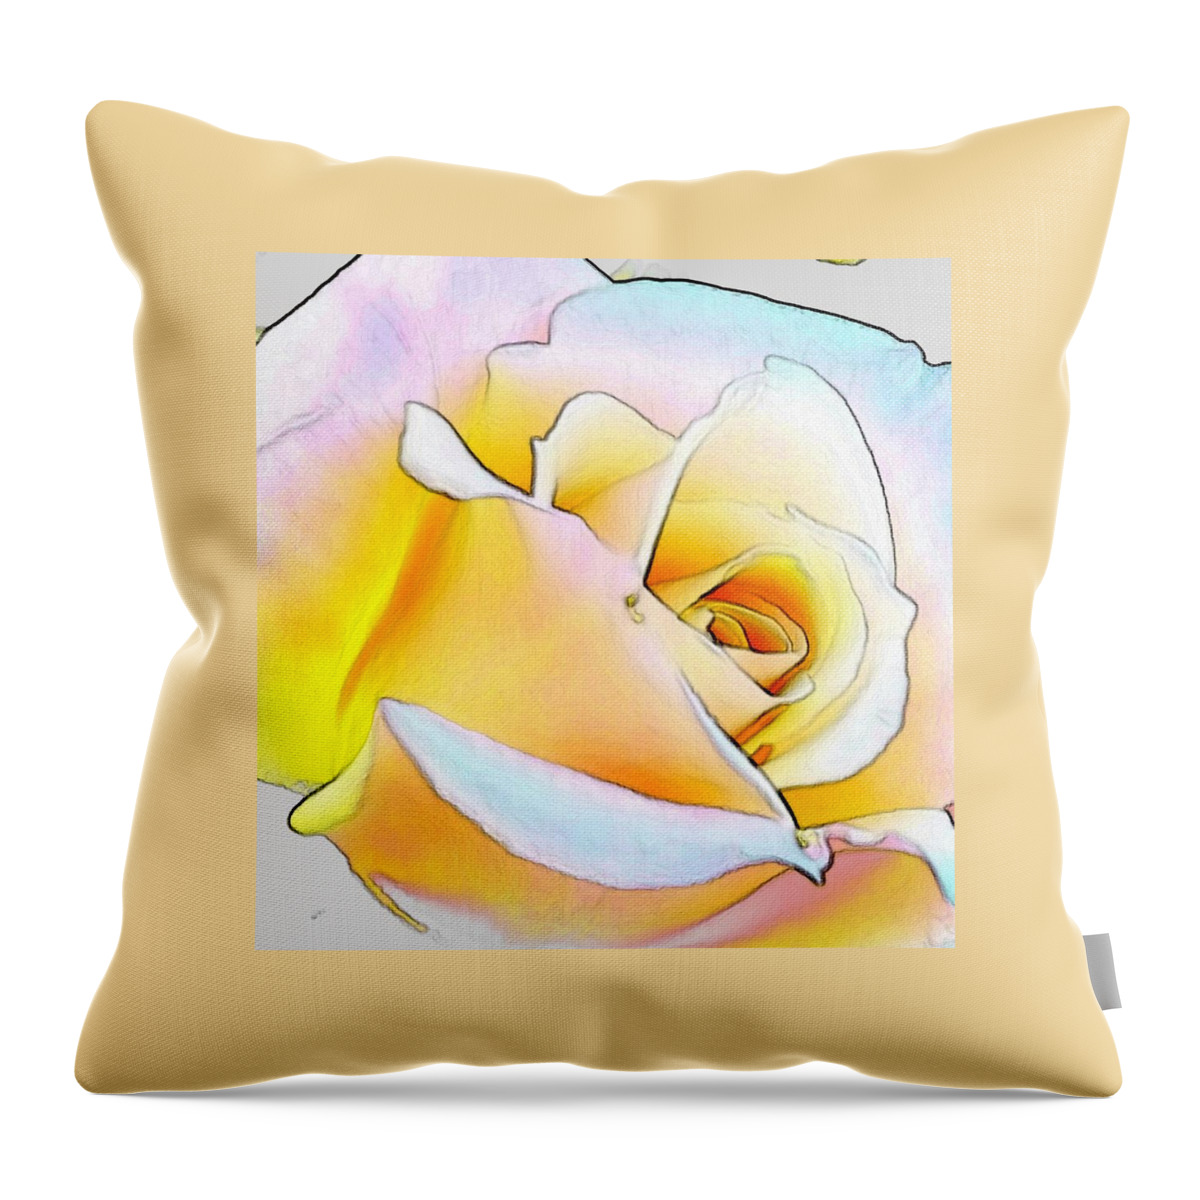 Flower Throw Pillow featuring the digital art Shine by Kumiko Izumi